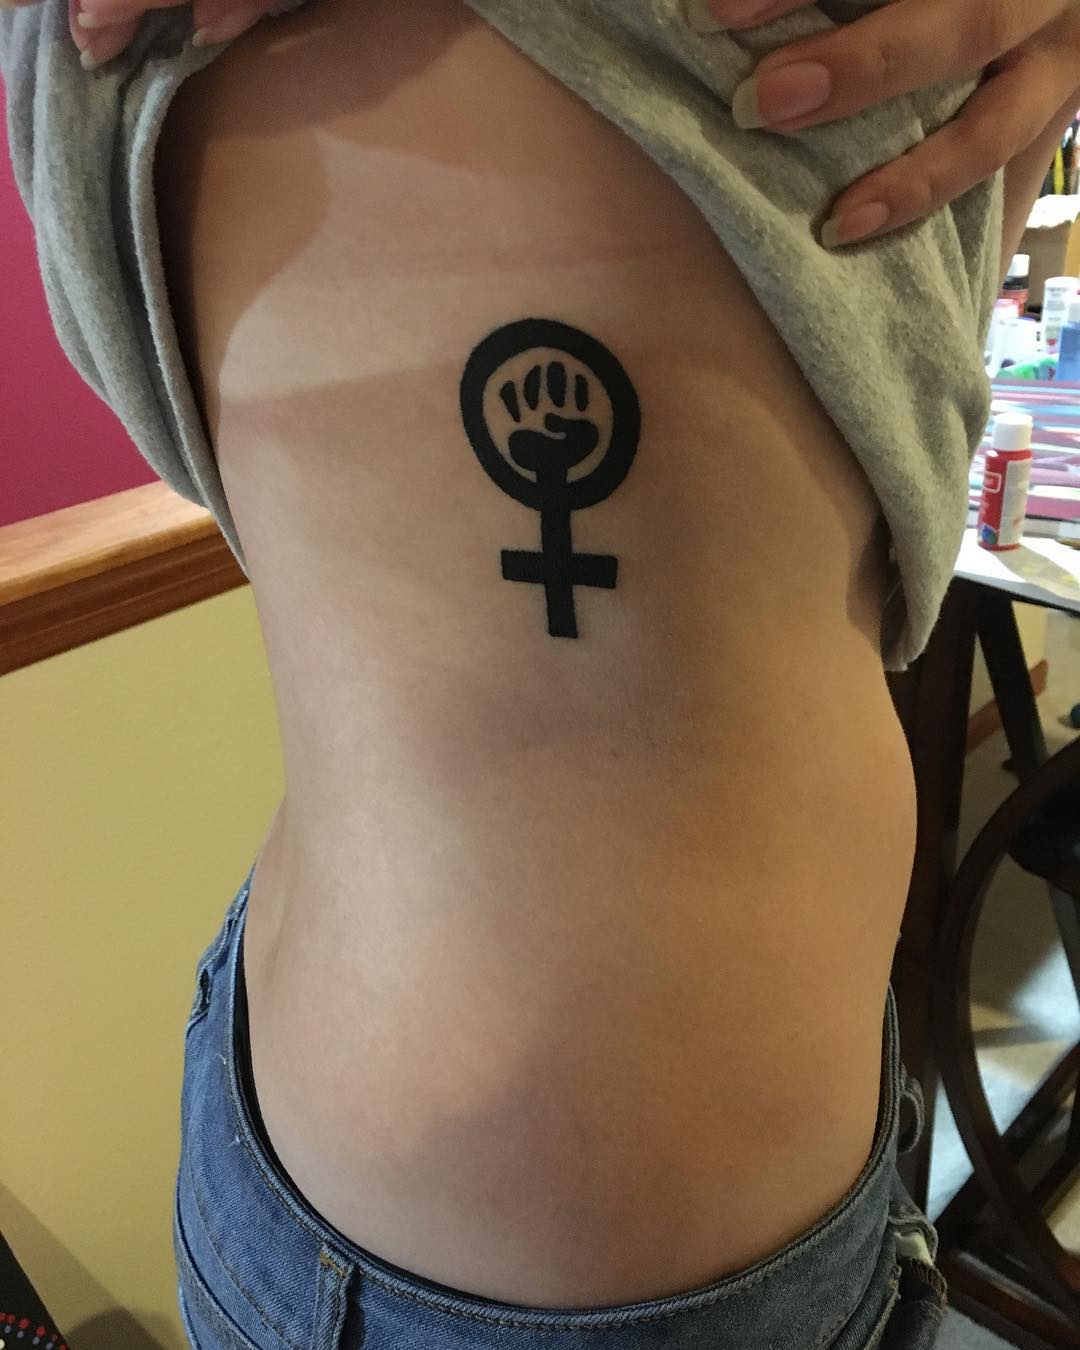 Black feminist side tattoo idea. Pic by mariabunczak